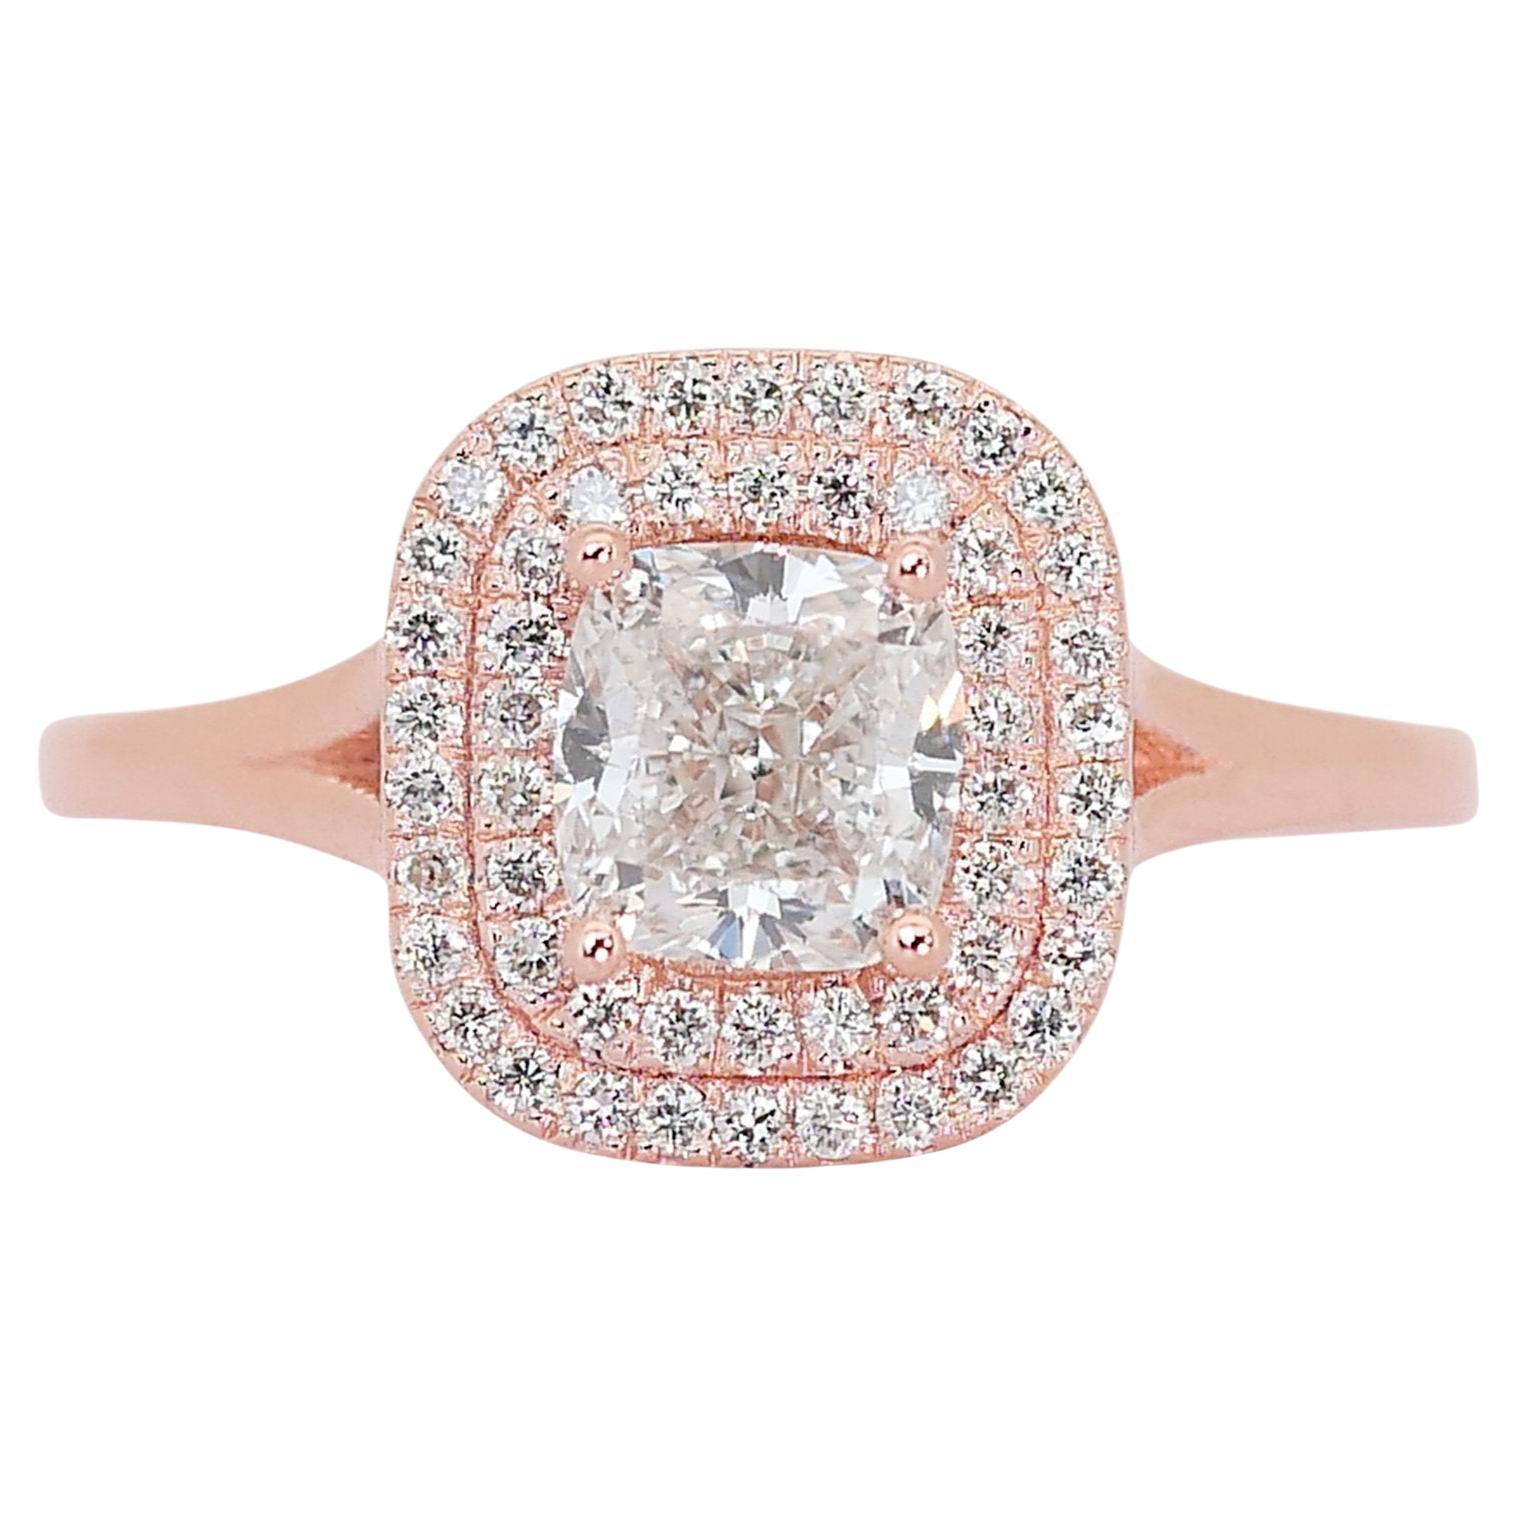 Eleganter 1,41 Karat Diamanten Doppel-Halo-Ring aus 18 Karat Roségold - GIA zertifiziert